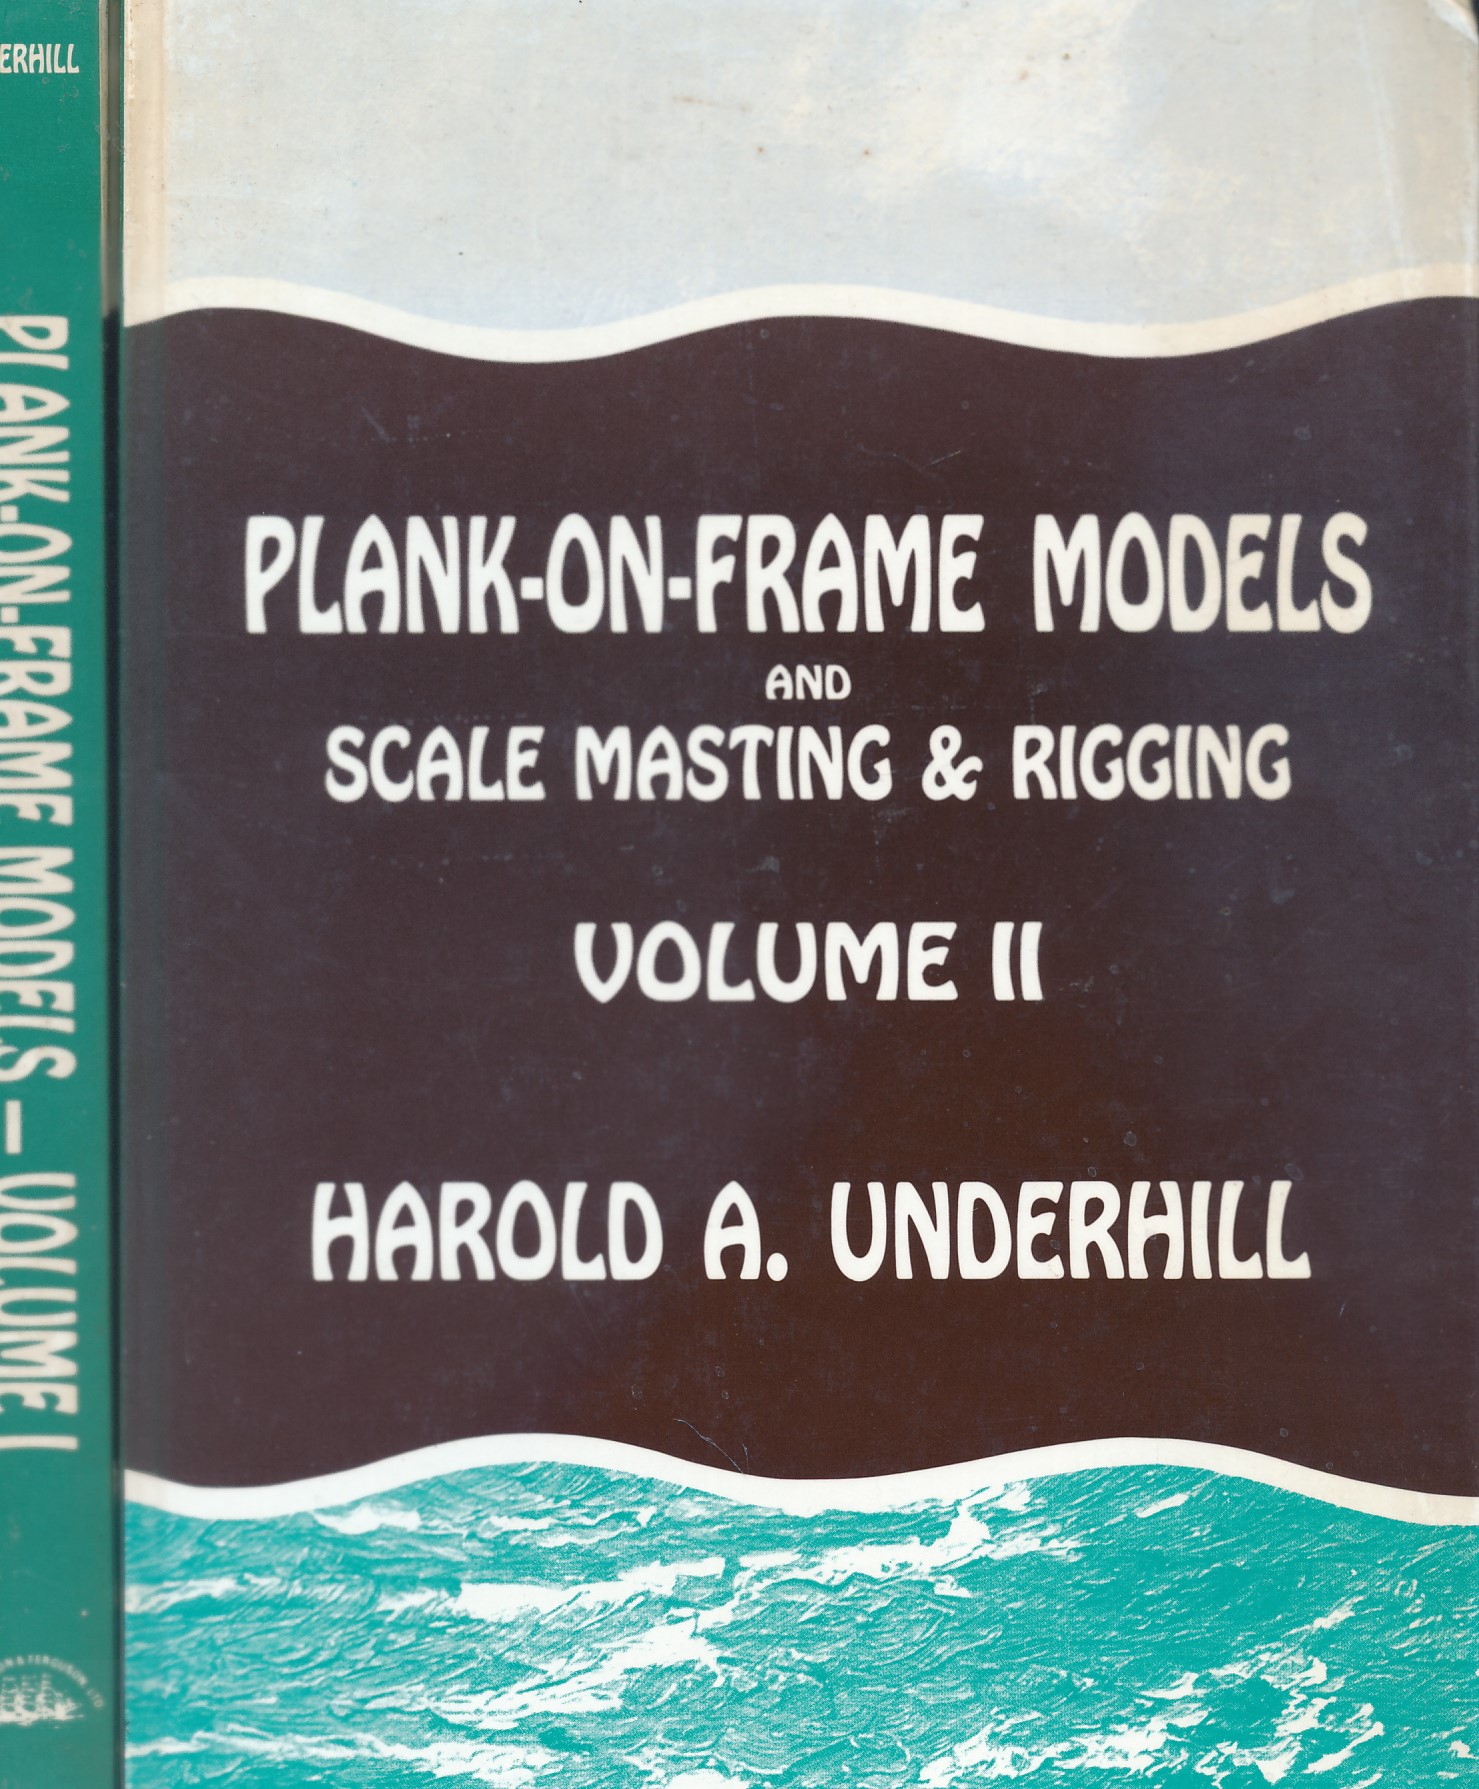 Plank-on-Frame Models and Scale Masting & Rigging. 2 volume set.